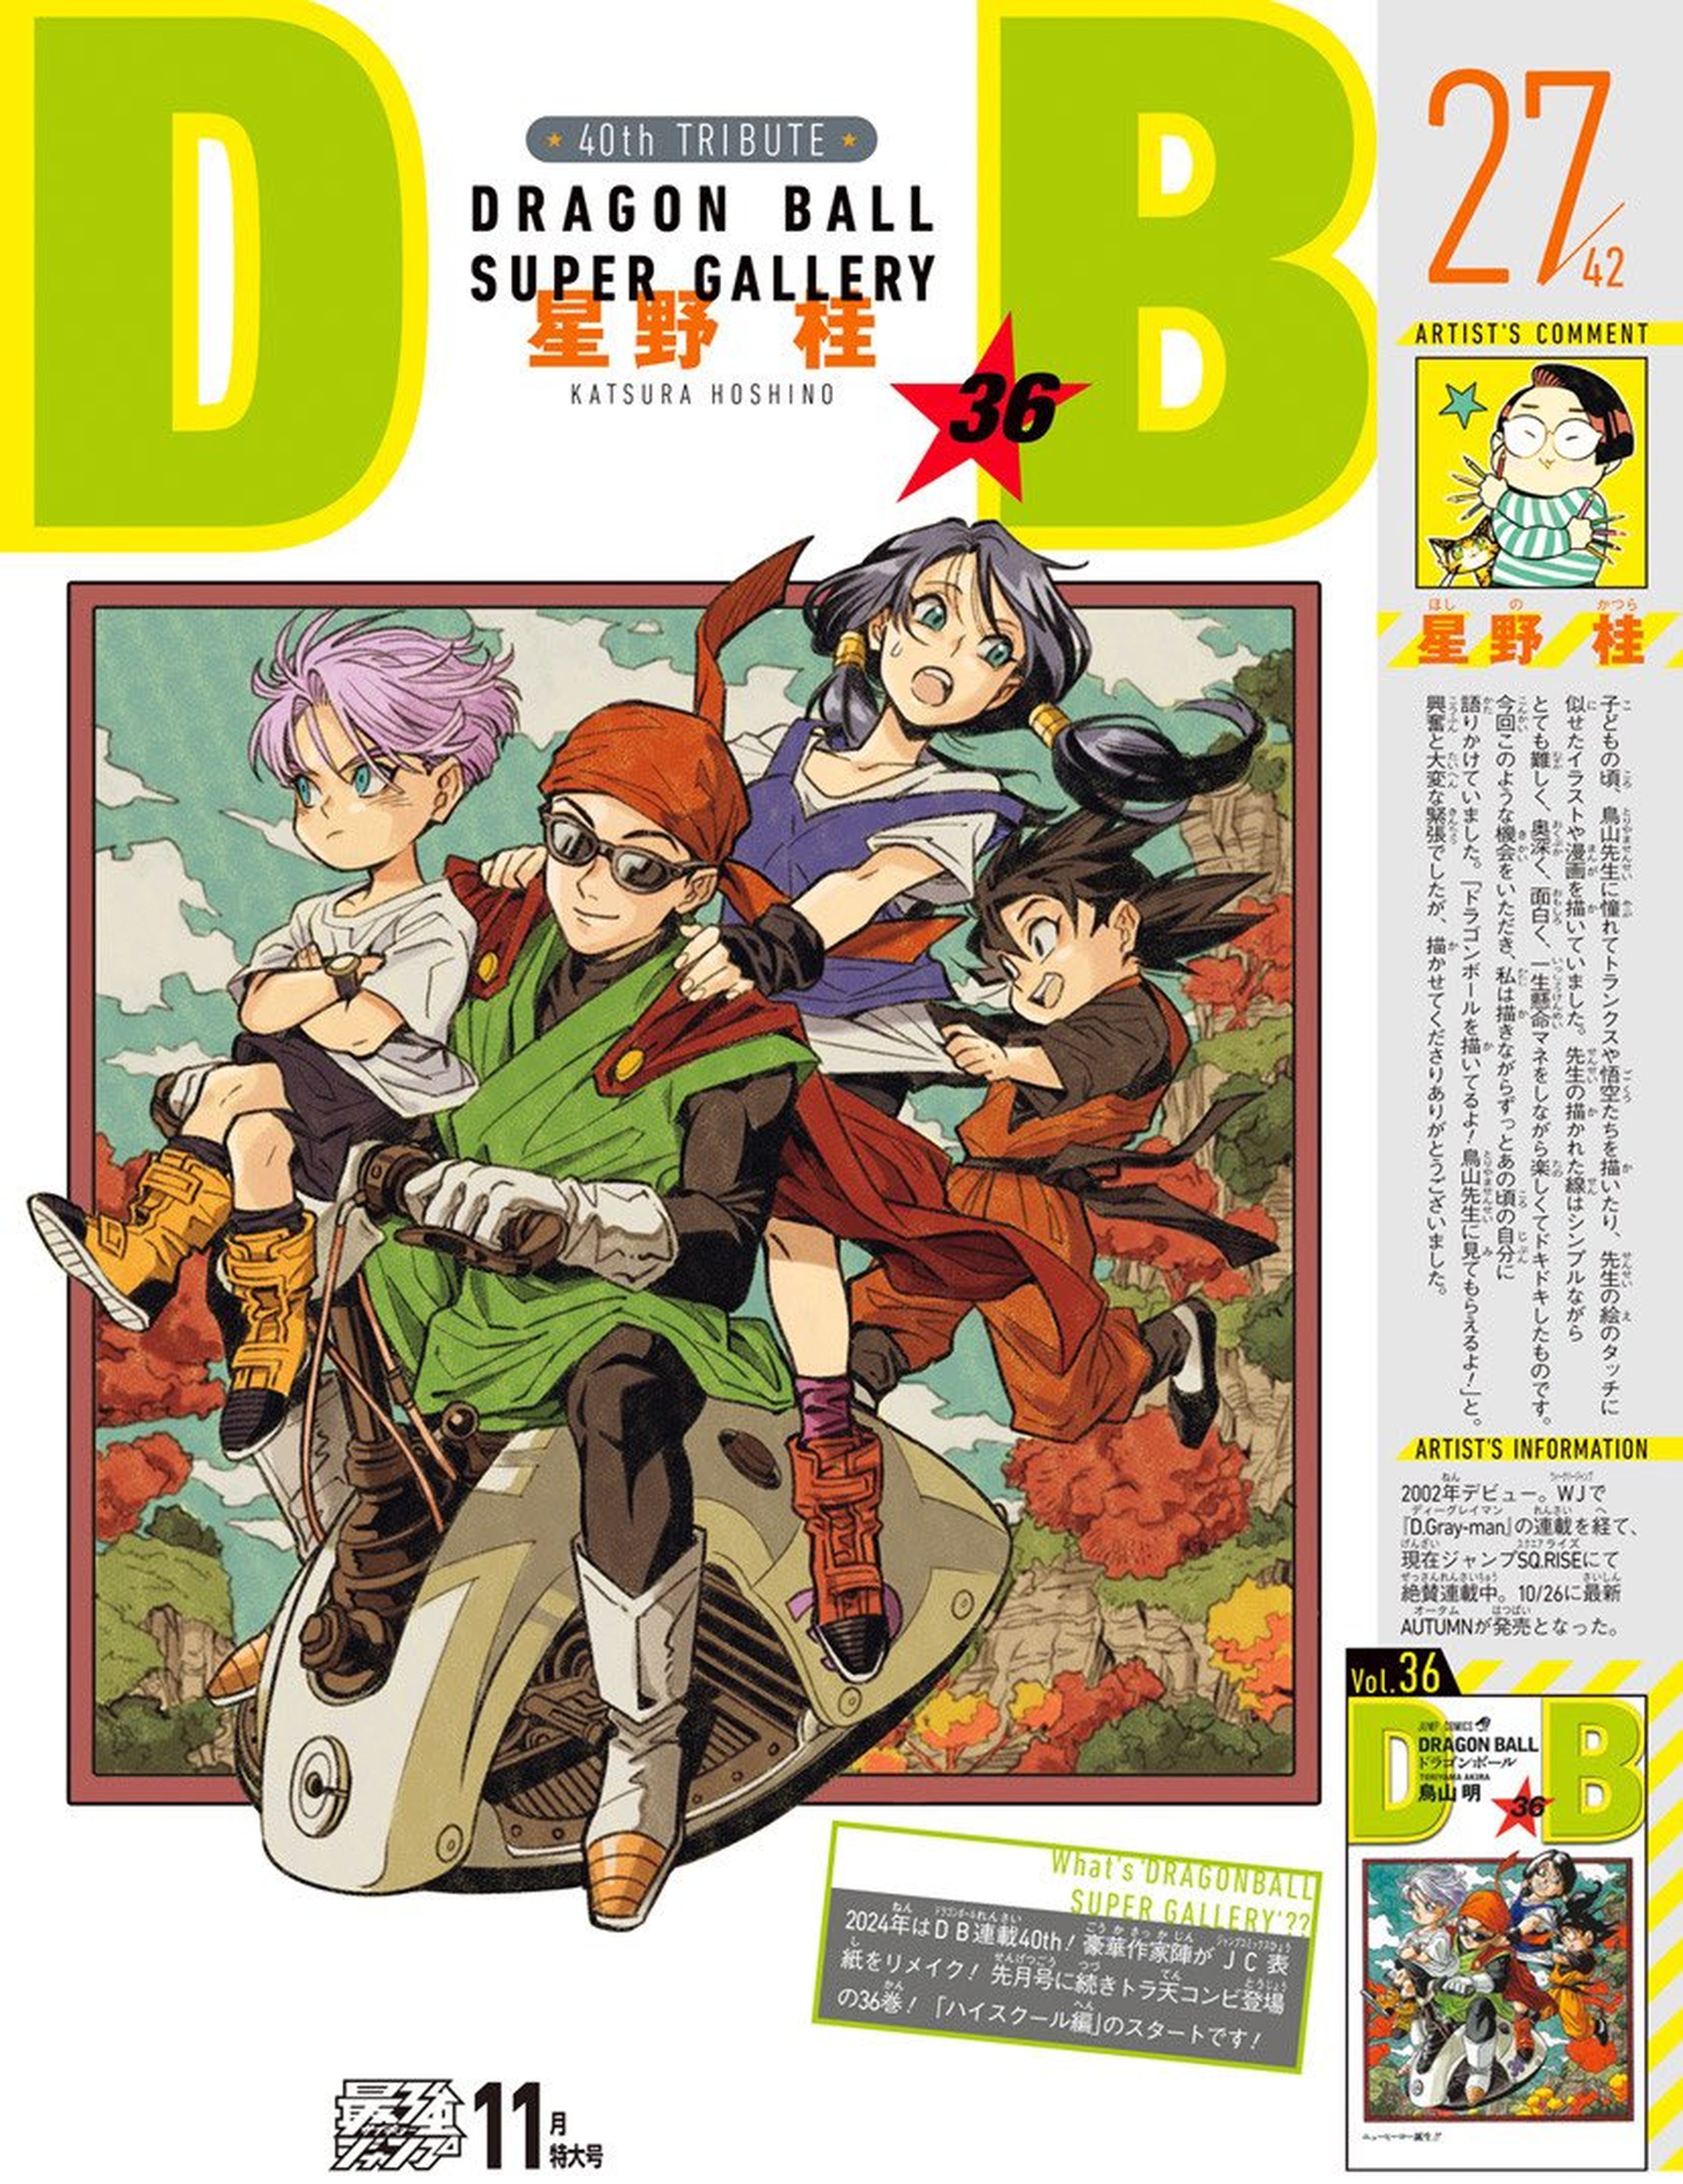 Dragon Ball - Katsura Hoshino, autor de D.Gray-man, recrea una de las portadas originales de la serie manga de Akira Toriyama con una fidelidad bestial